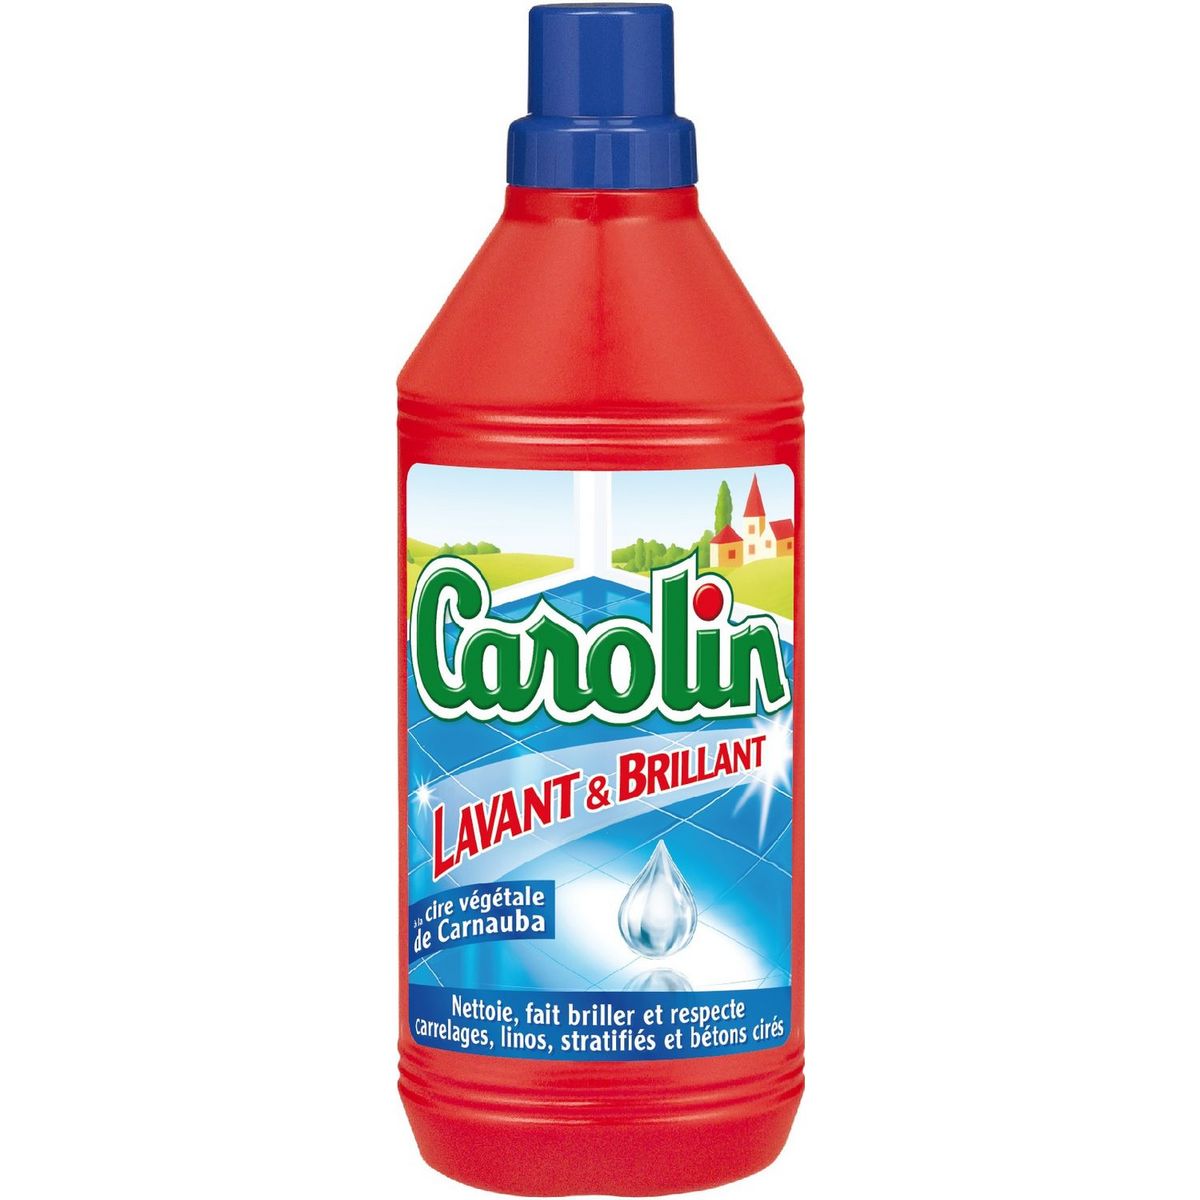 CAROLIN Carolin shiny cleanser 1L